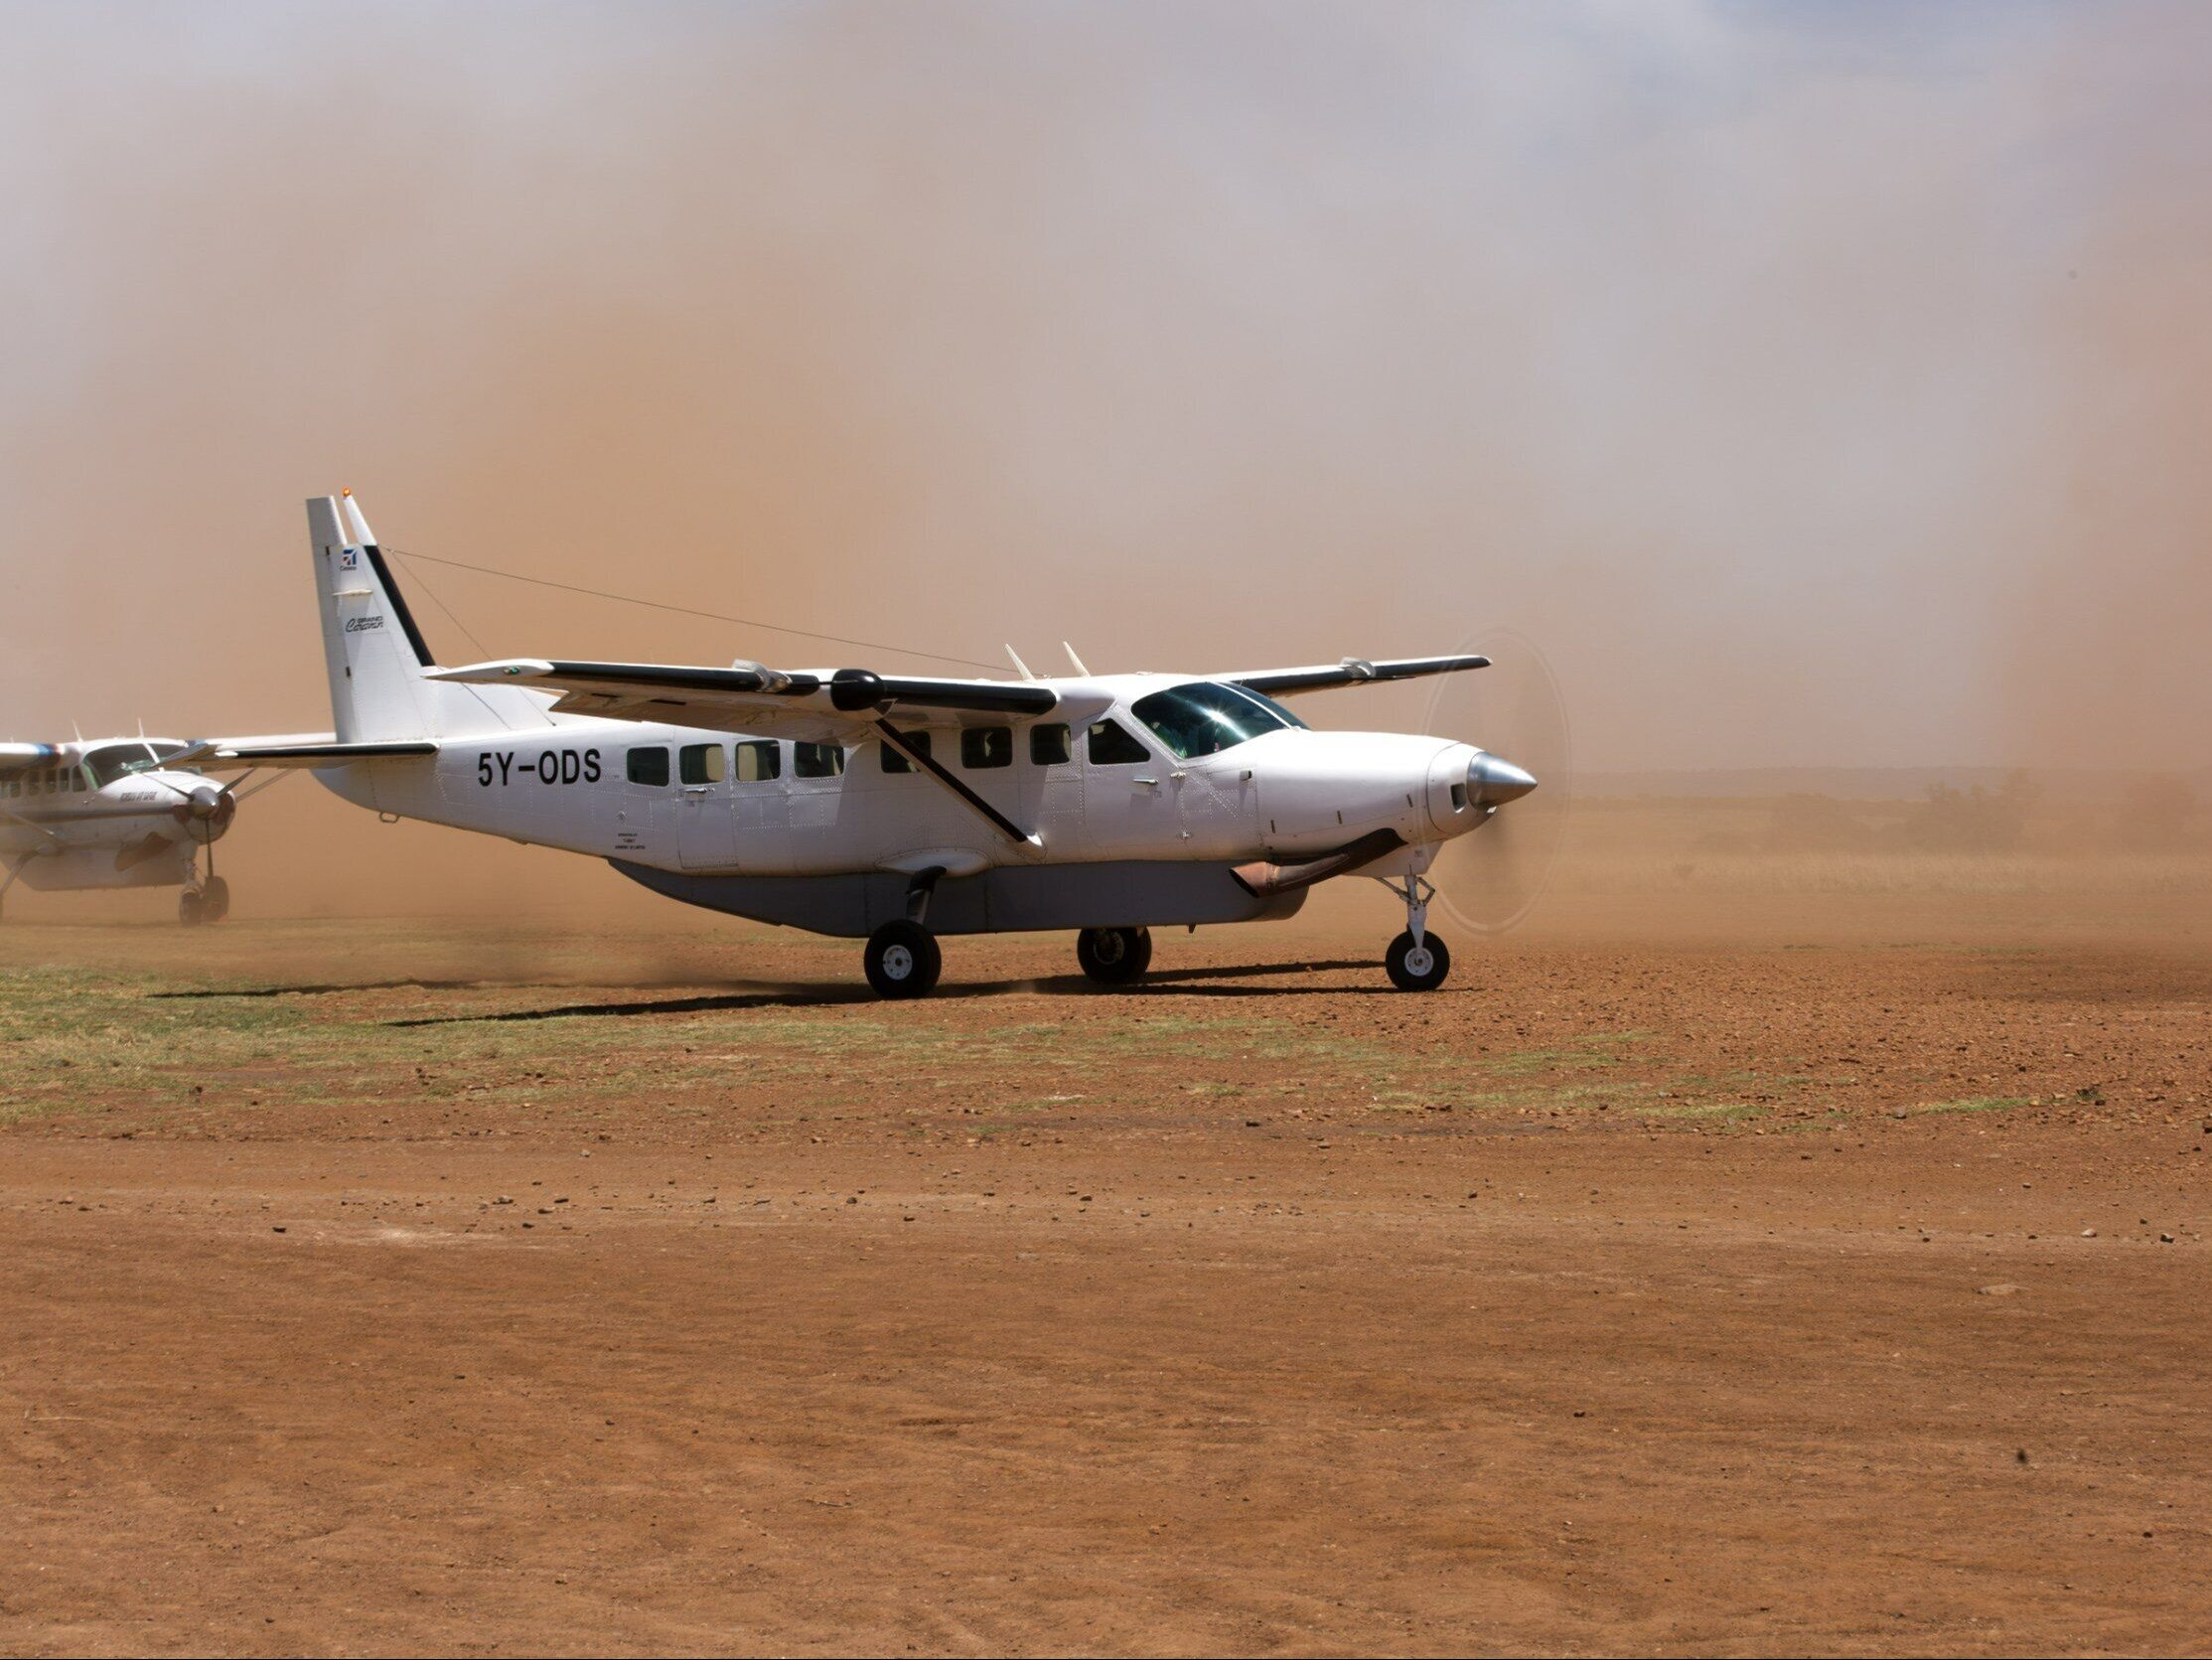 Plane collision in Kenya.  Two people died